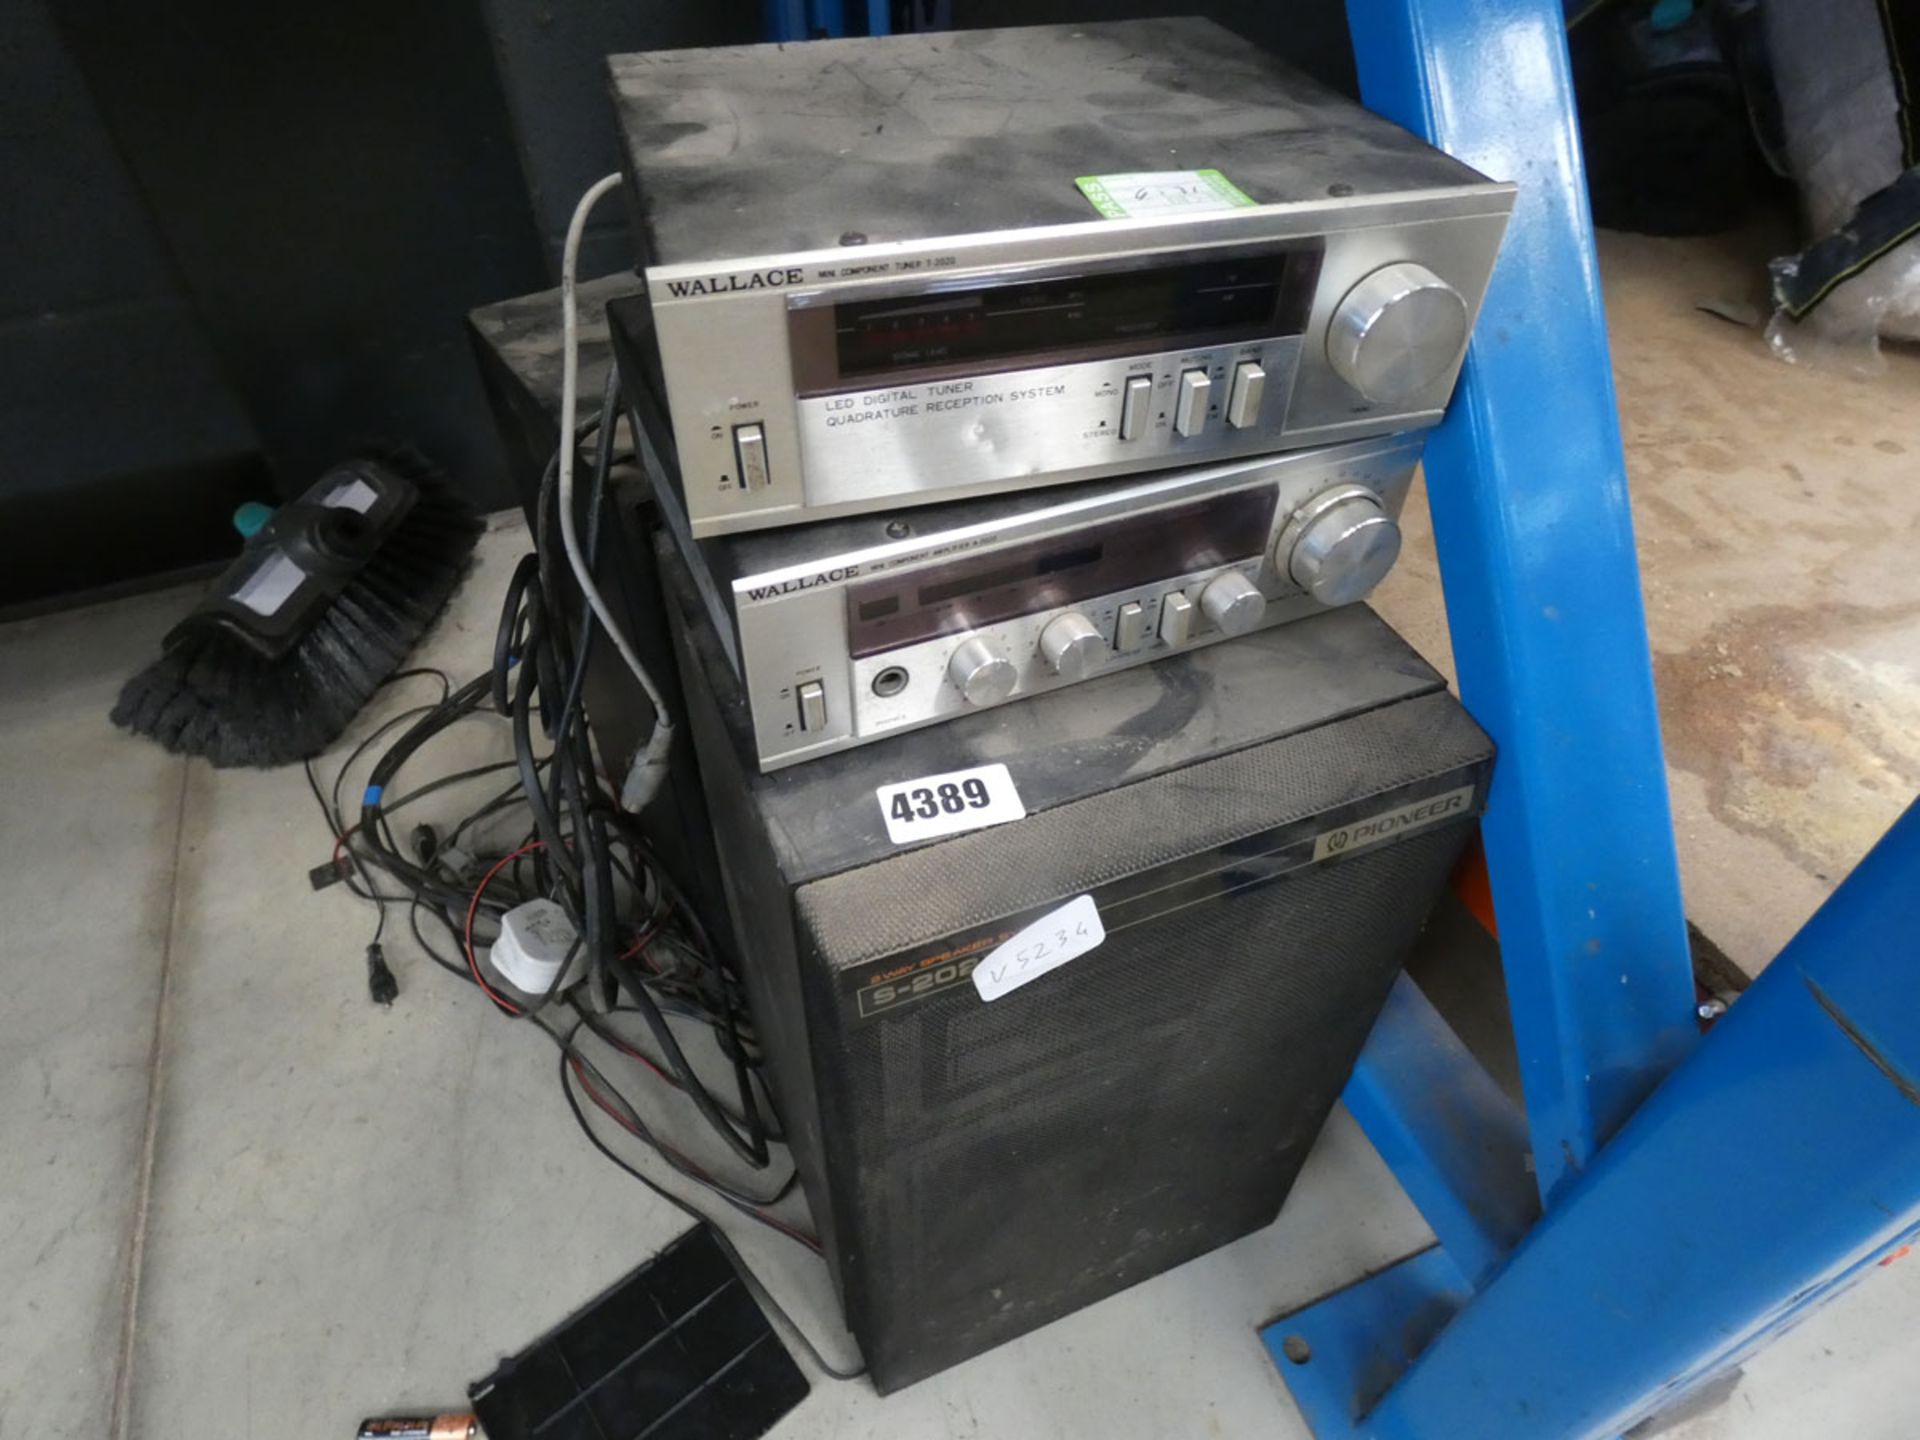 Wallis digital tuner and amplifier and 2 speakers